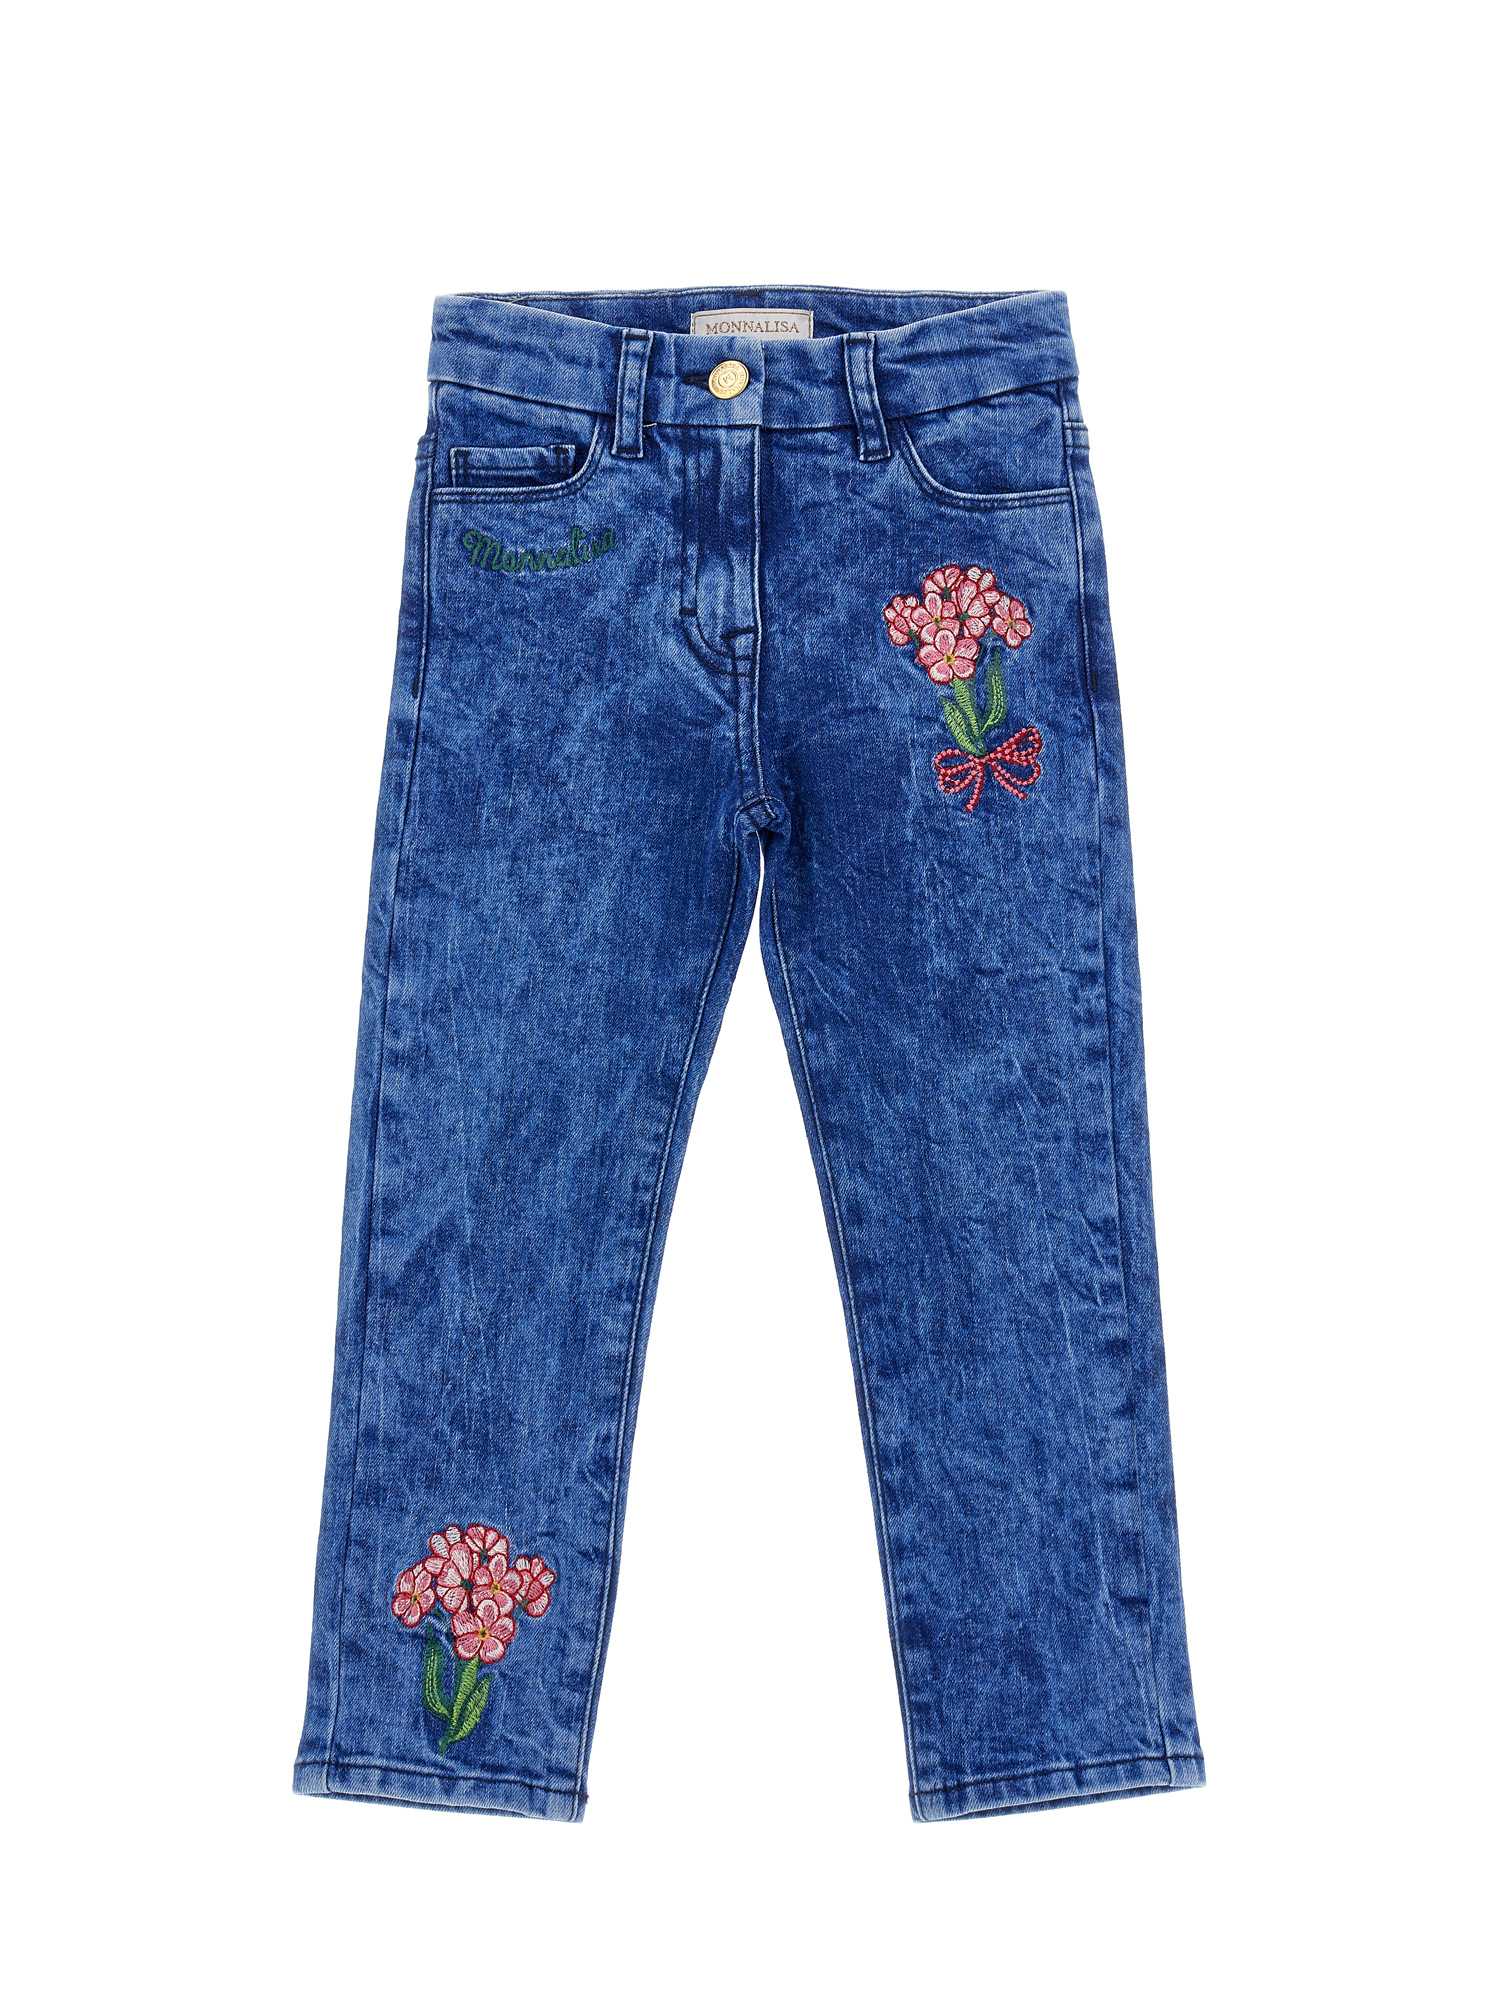 Monnalisa Embroidered Denim Jeans In Denim Blue + Pink